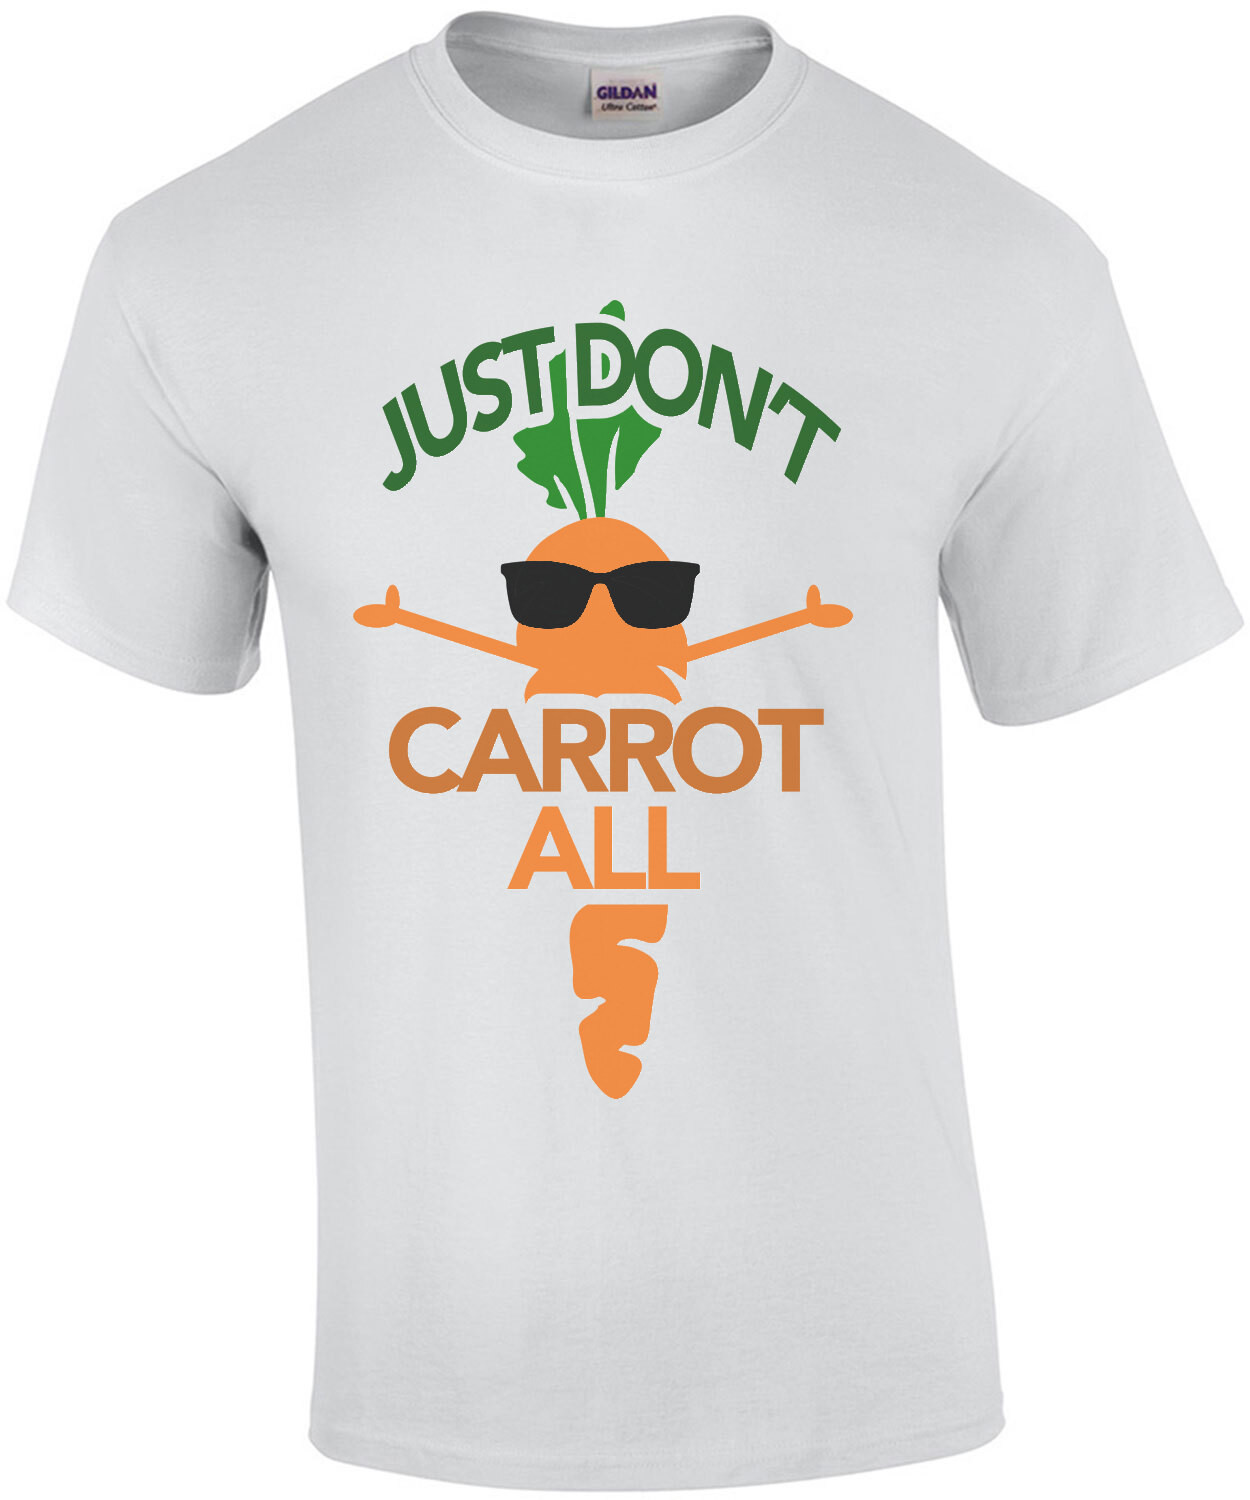 Just Don't Carrot All - pun t-shirt